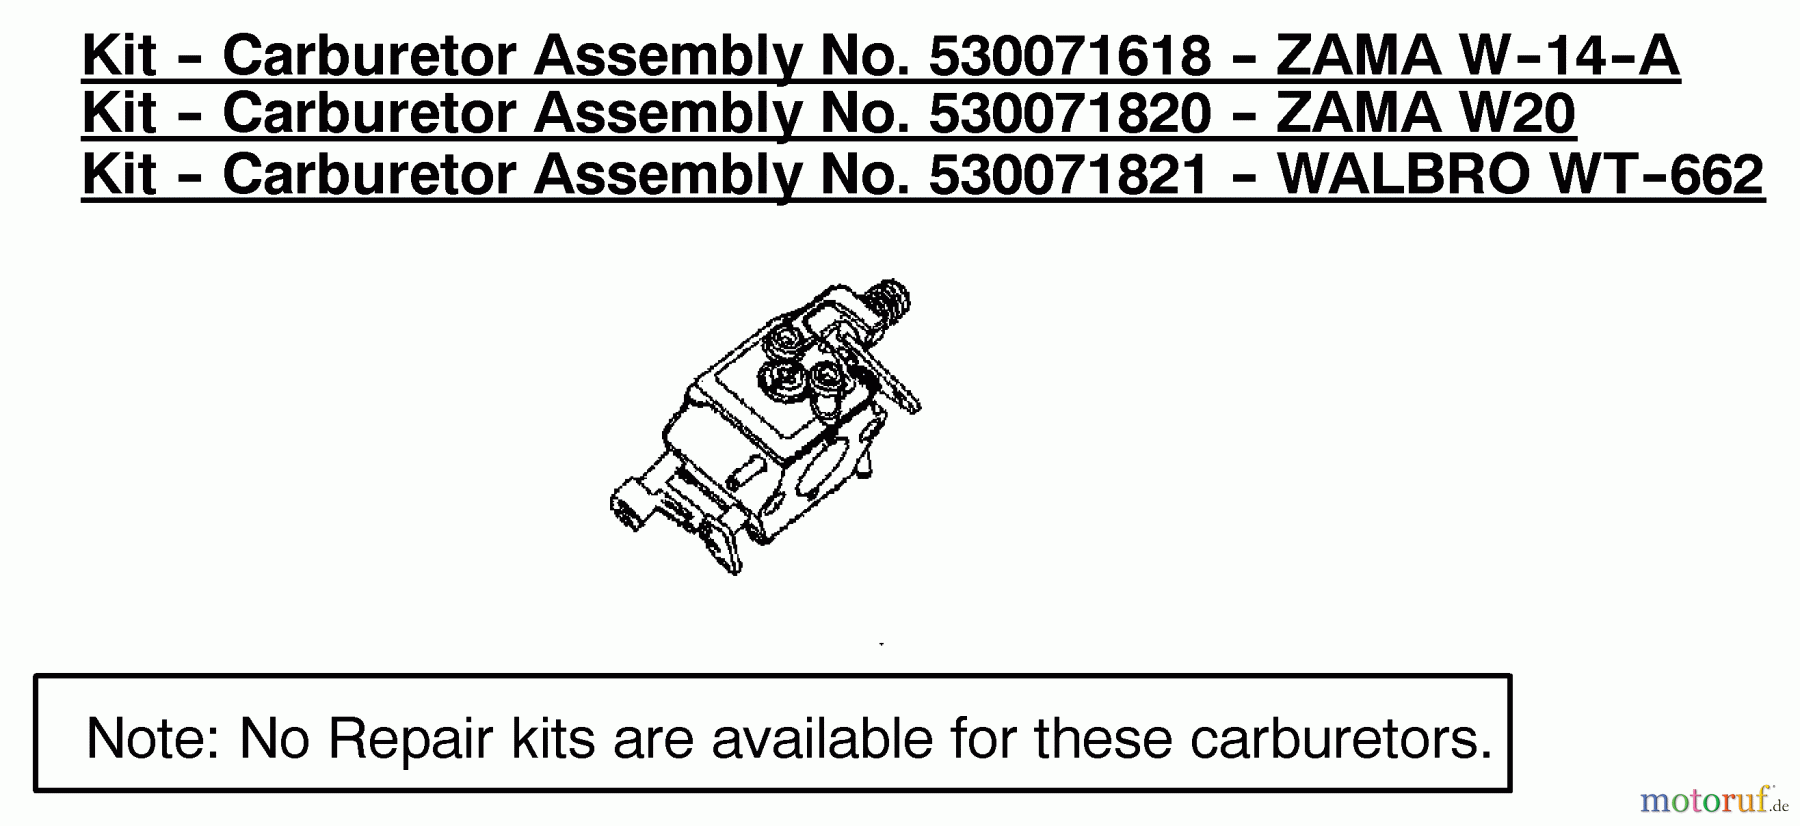  Poulan / Weed Eater Motorsägen 1975 (Type 1) - Poulan Woodshark Chainsaw Carburetor Assembly (Walbro WT-662) P/N 530071821